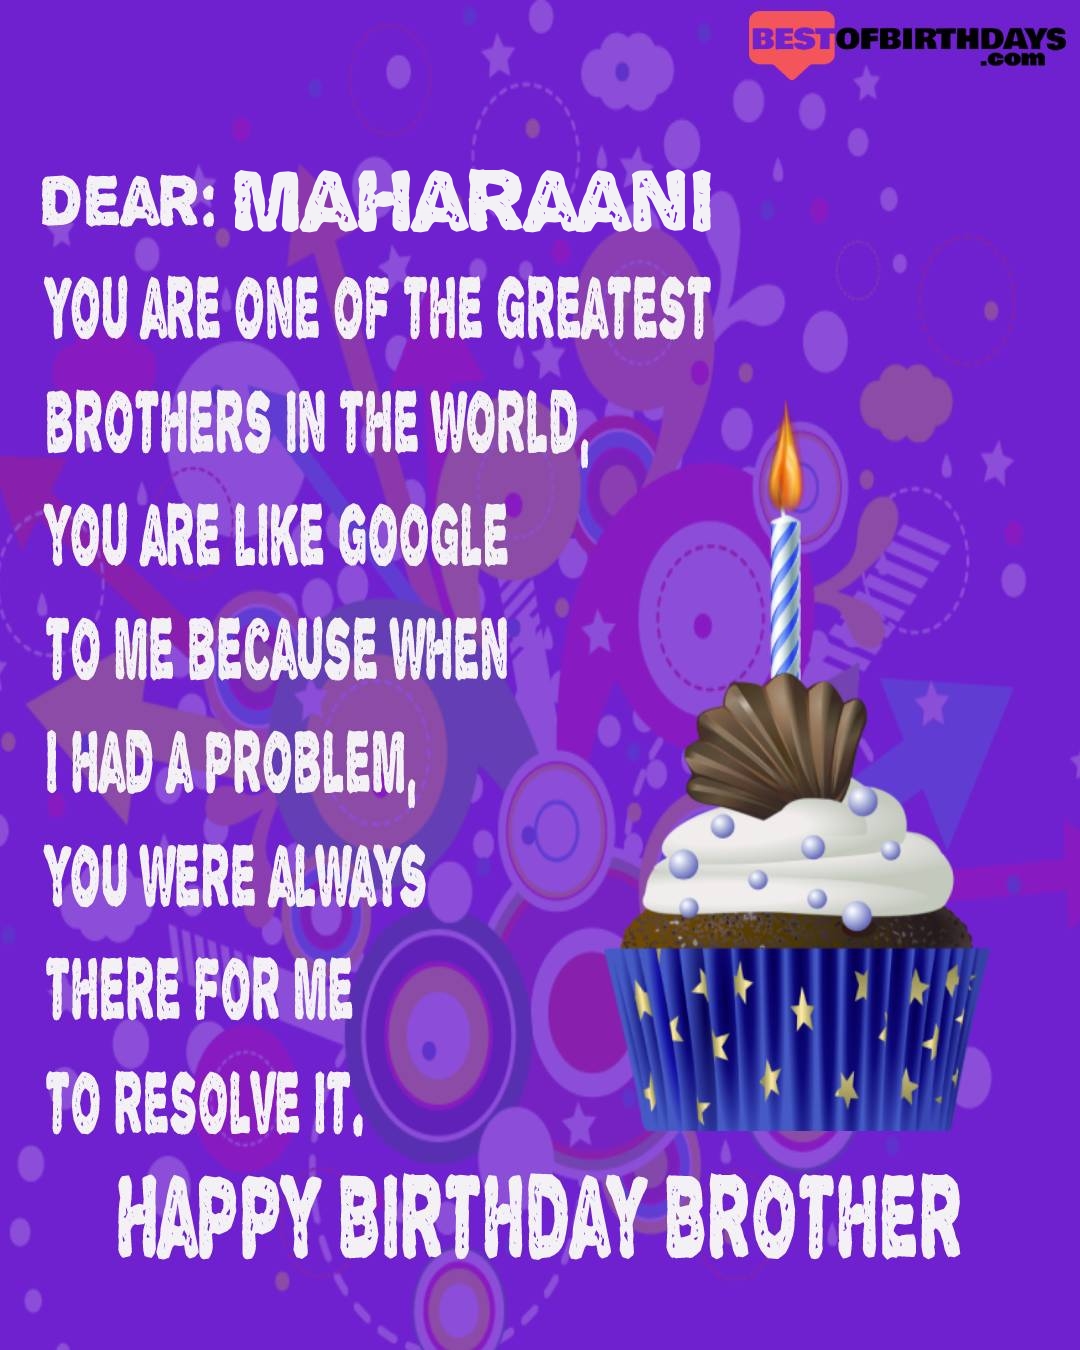 Happy birthday maharaani bhai brother bro